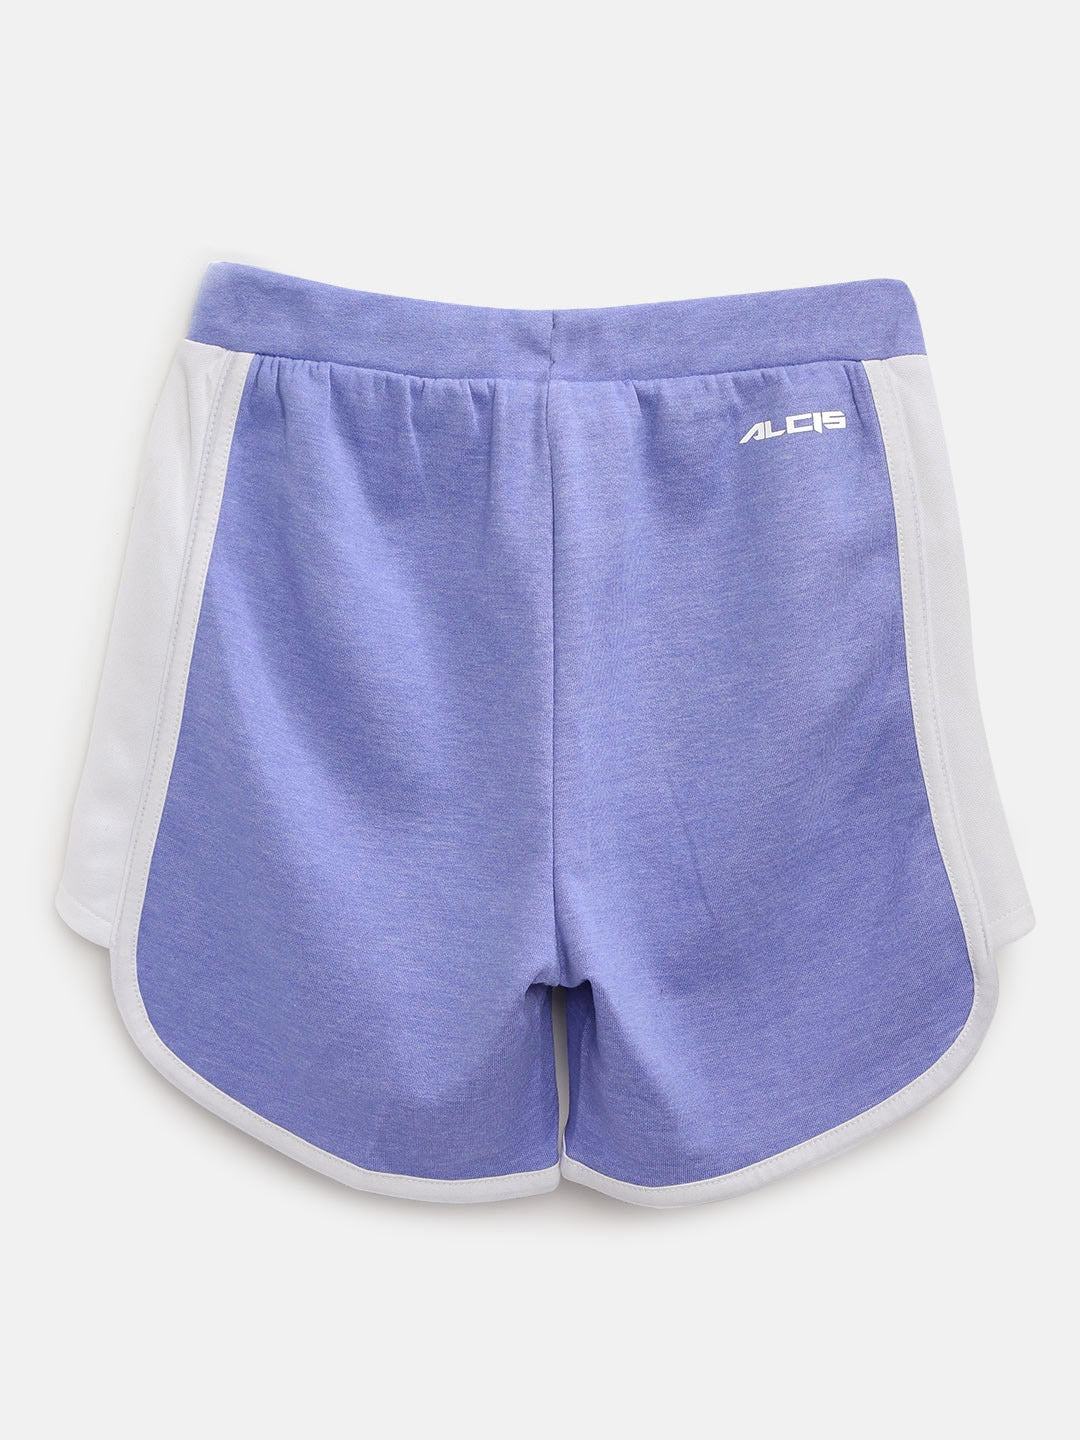 Alcis Girls Purple  White Printed Detail Regular Fit Running Shorts